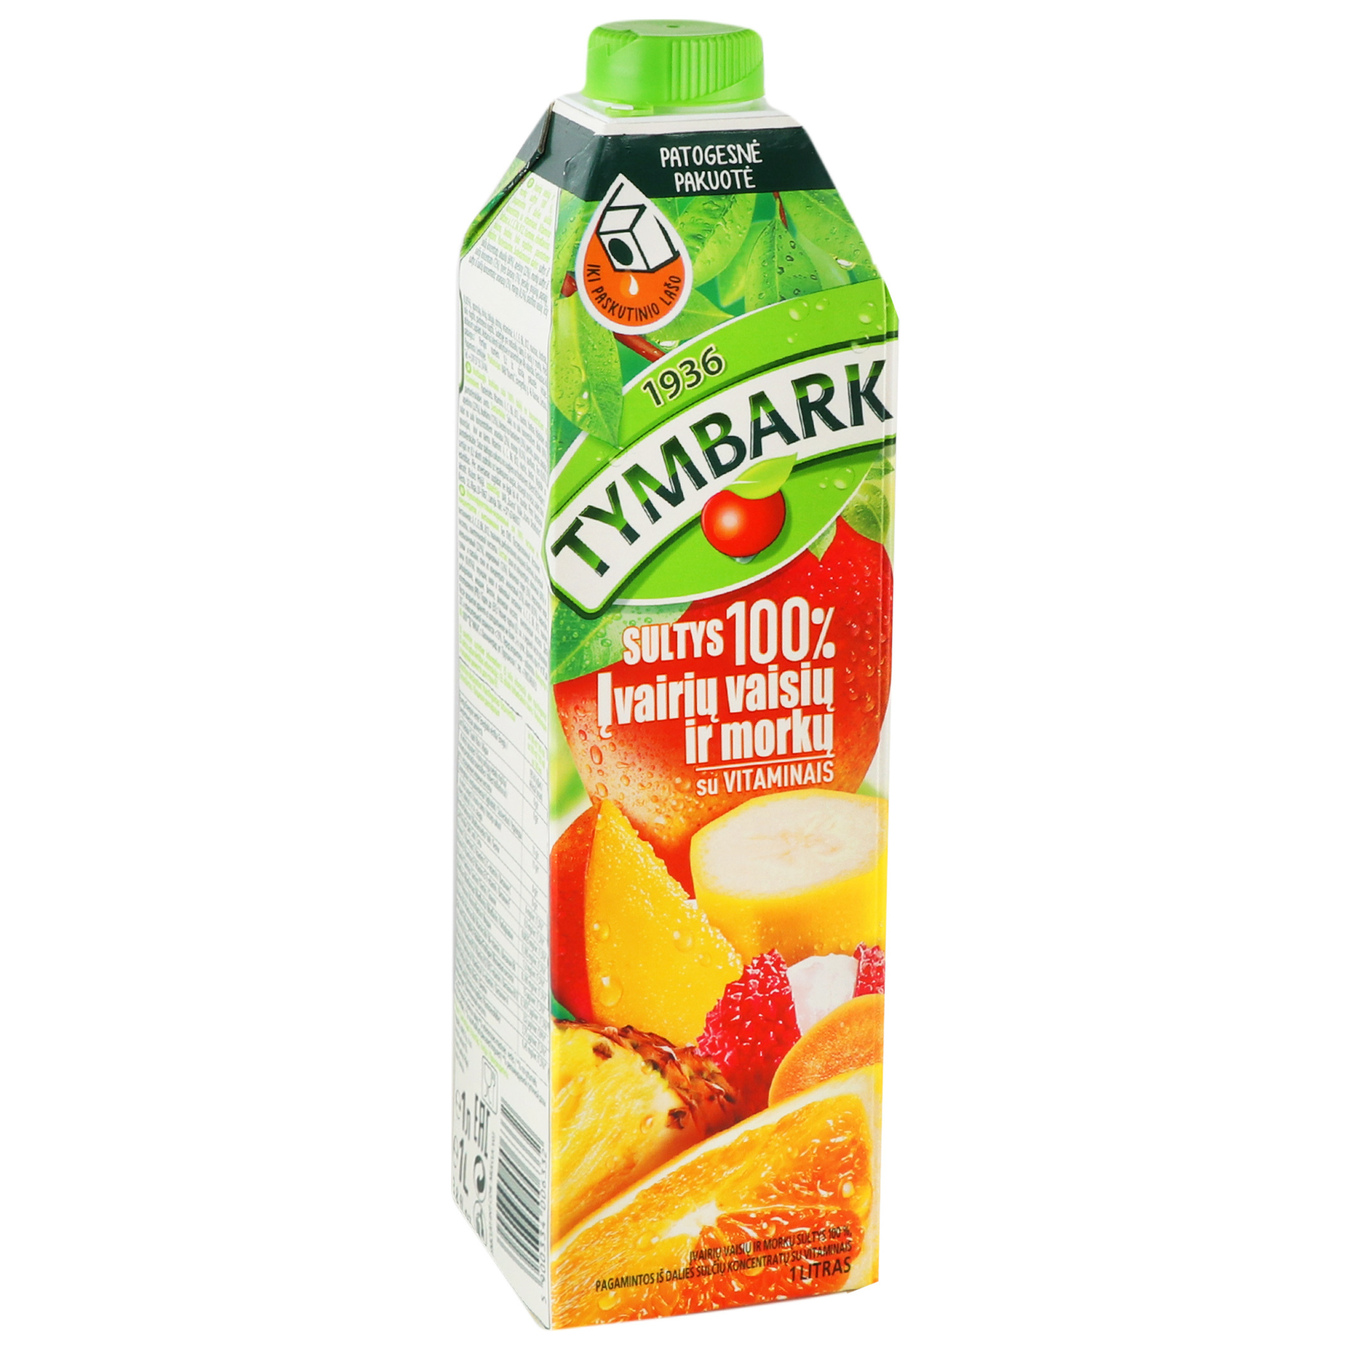 Tymbark multifruit carrot juice 1liter 2